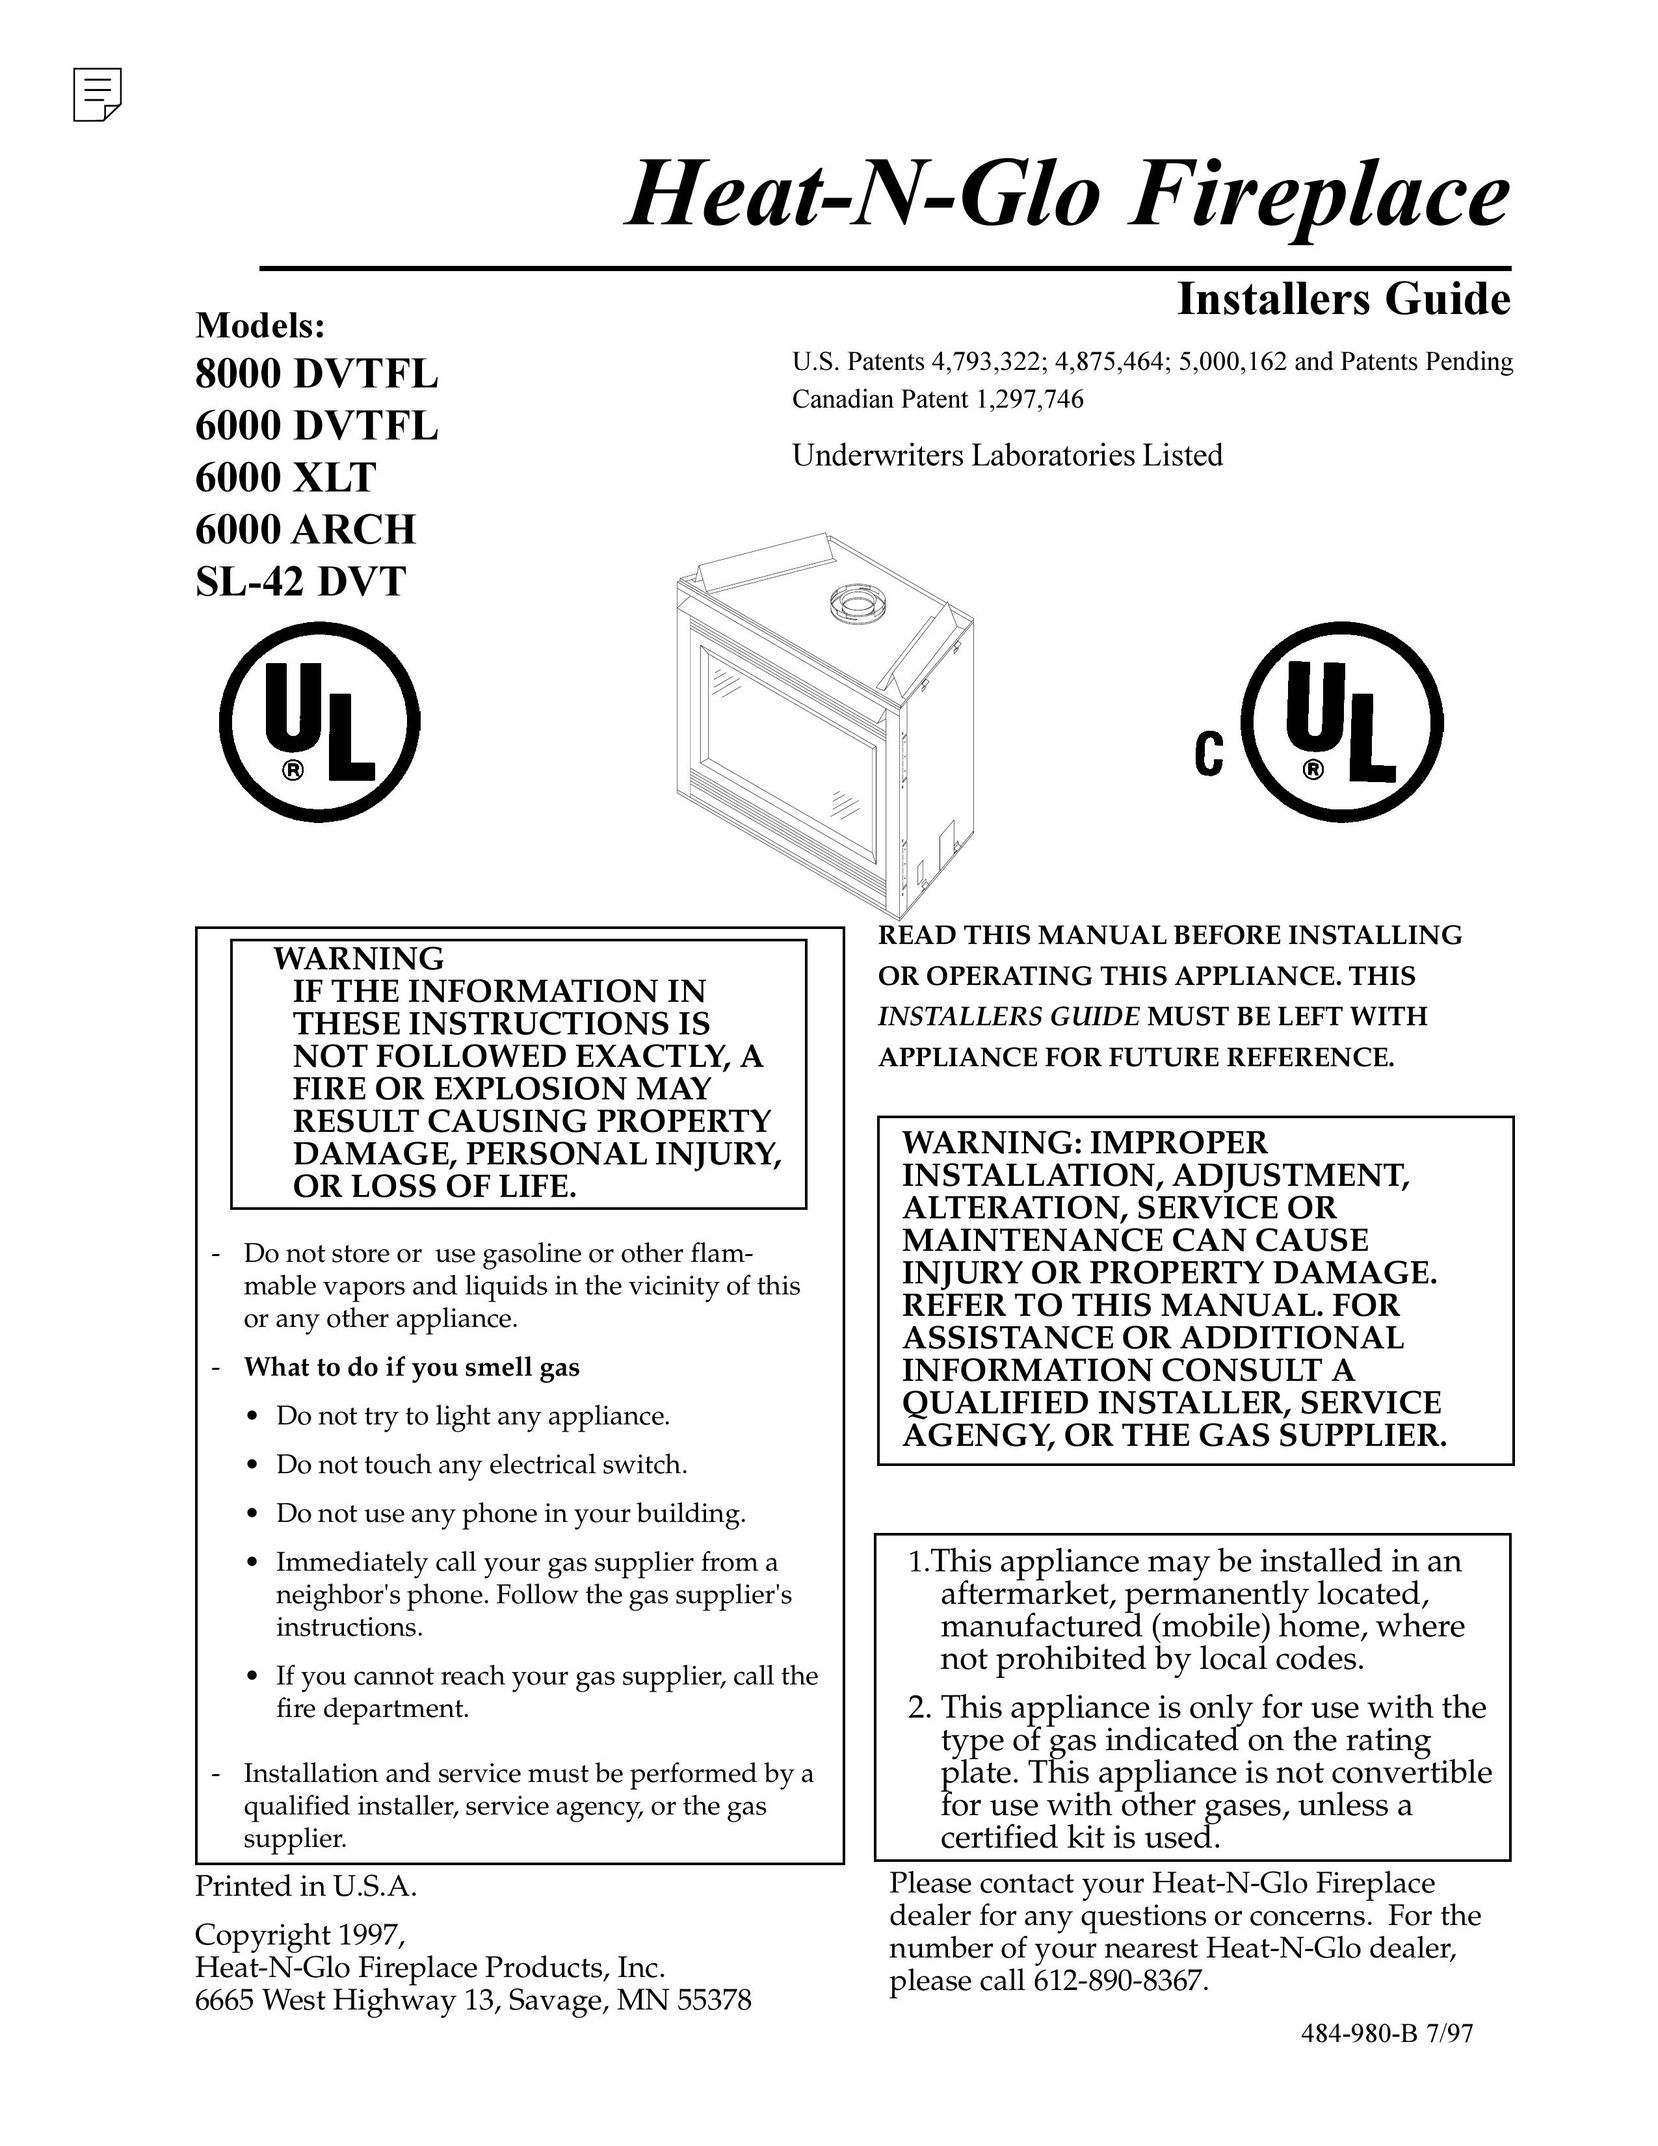 Heat & Glo LifeStyle 6000 DVTFL Indoor Fireplace User Manual